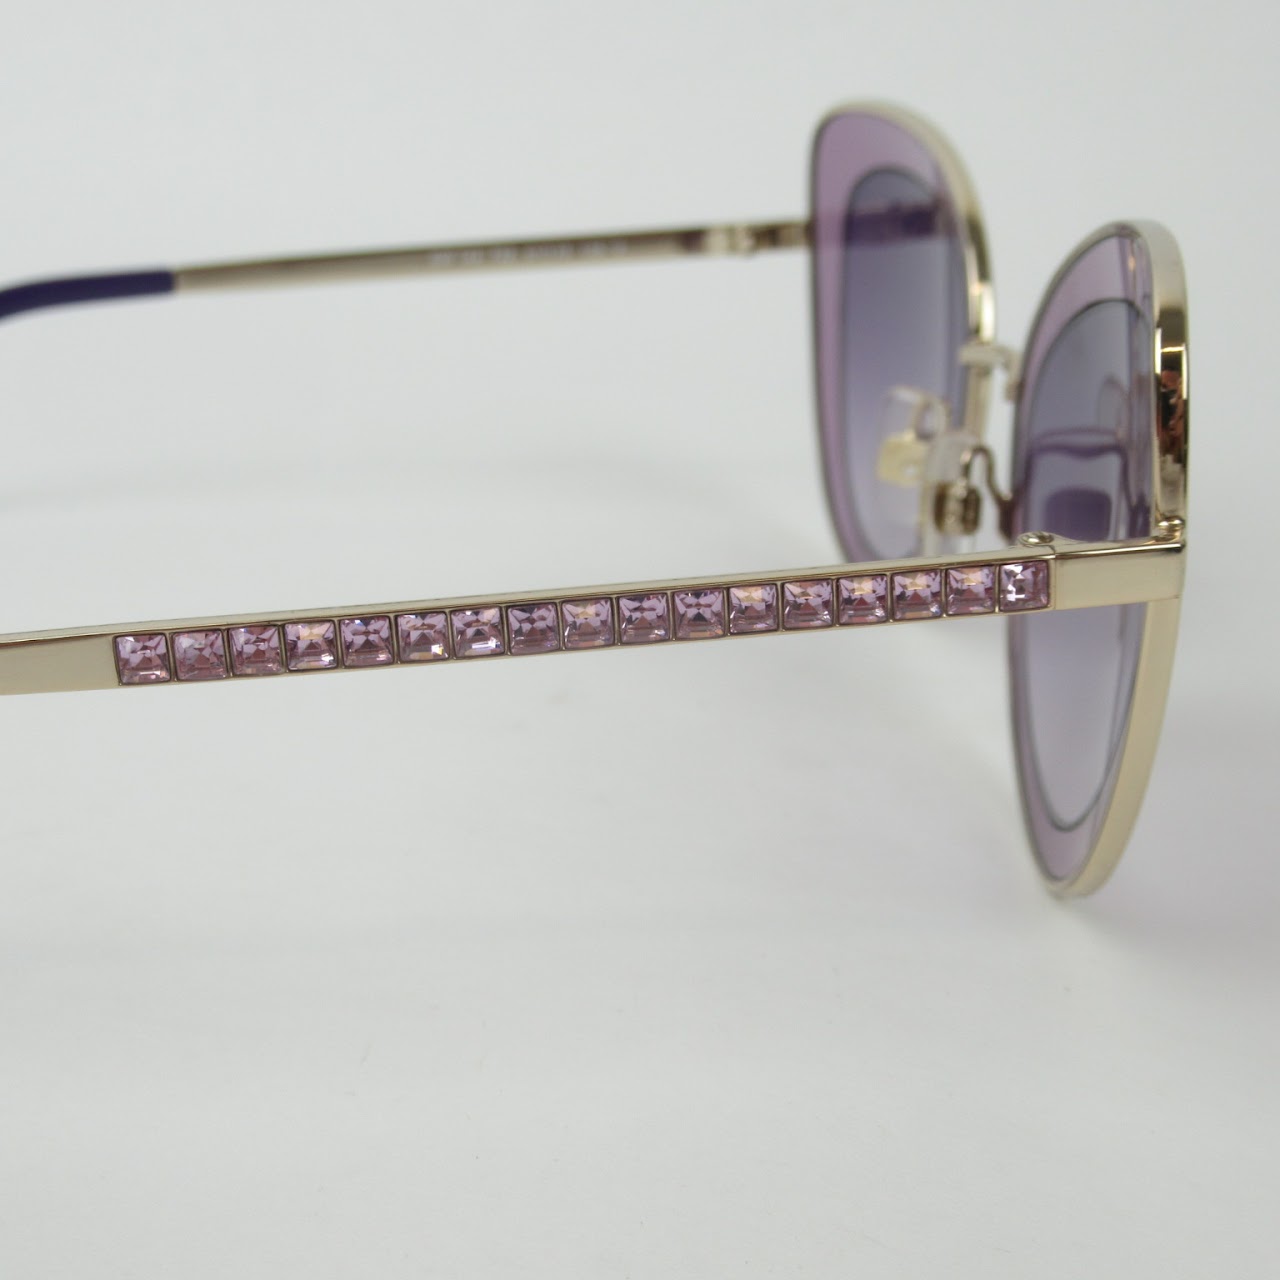 Swarovski Purple Crystal Sunglasses